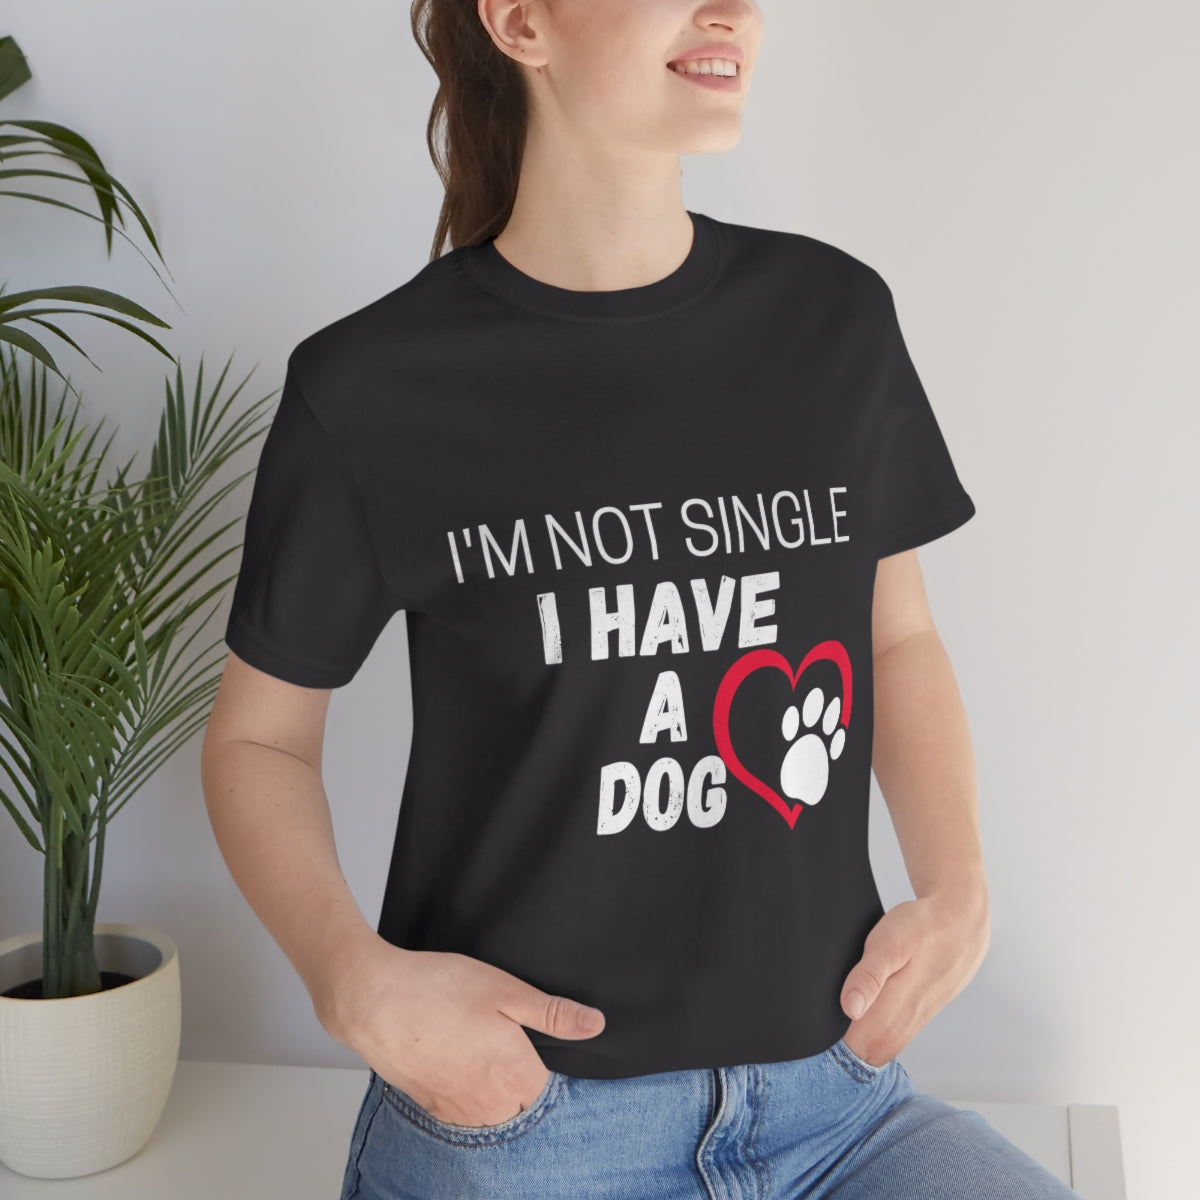 I'M NOT SINGLE I HAVE A DOG